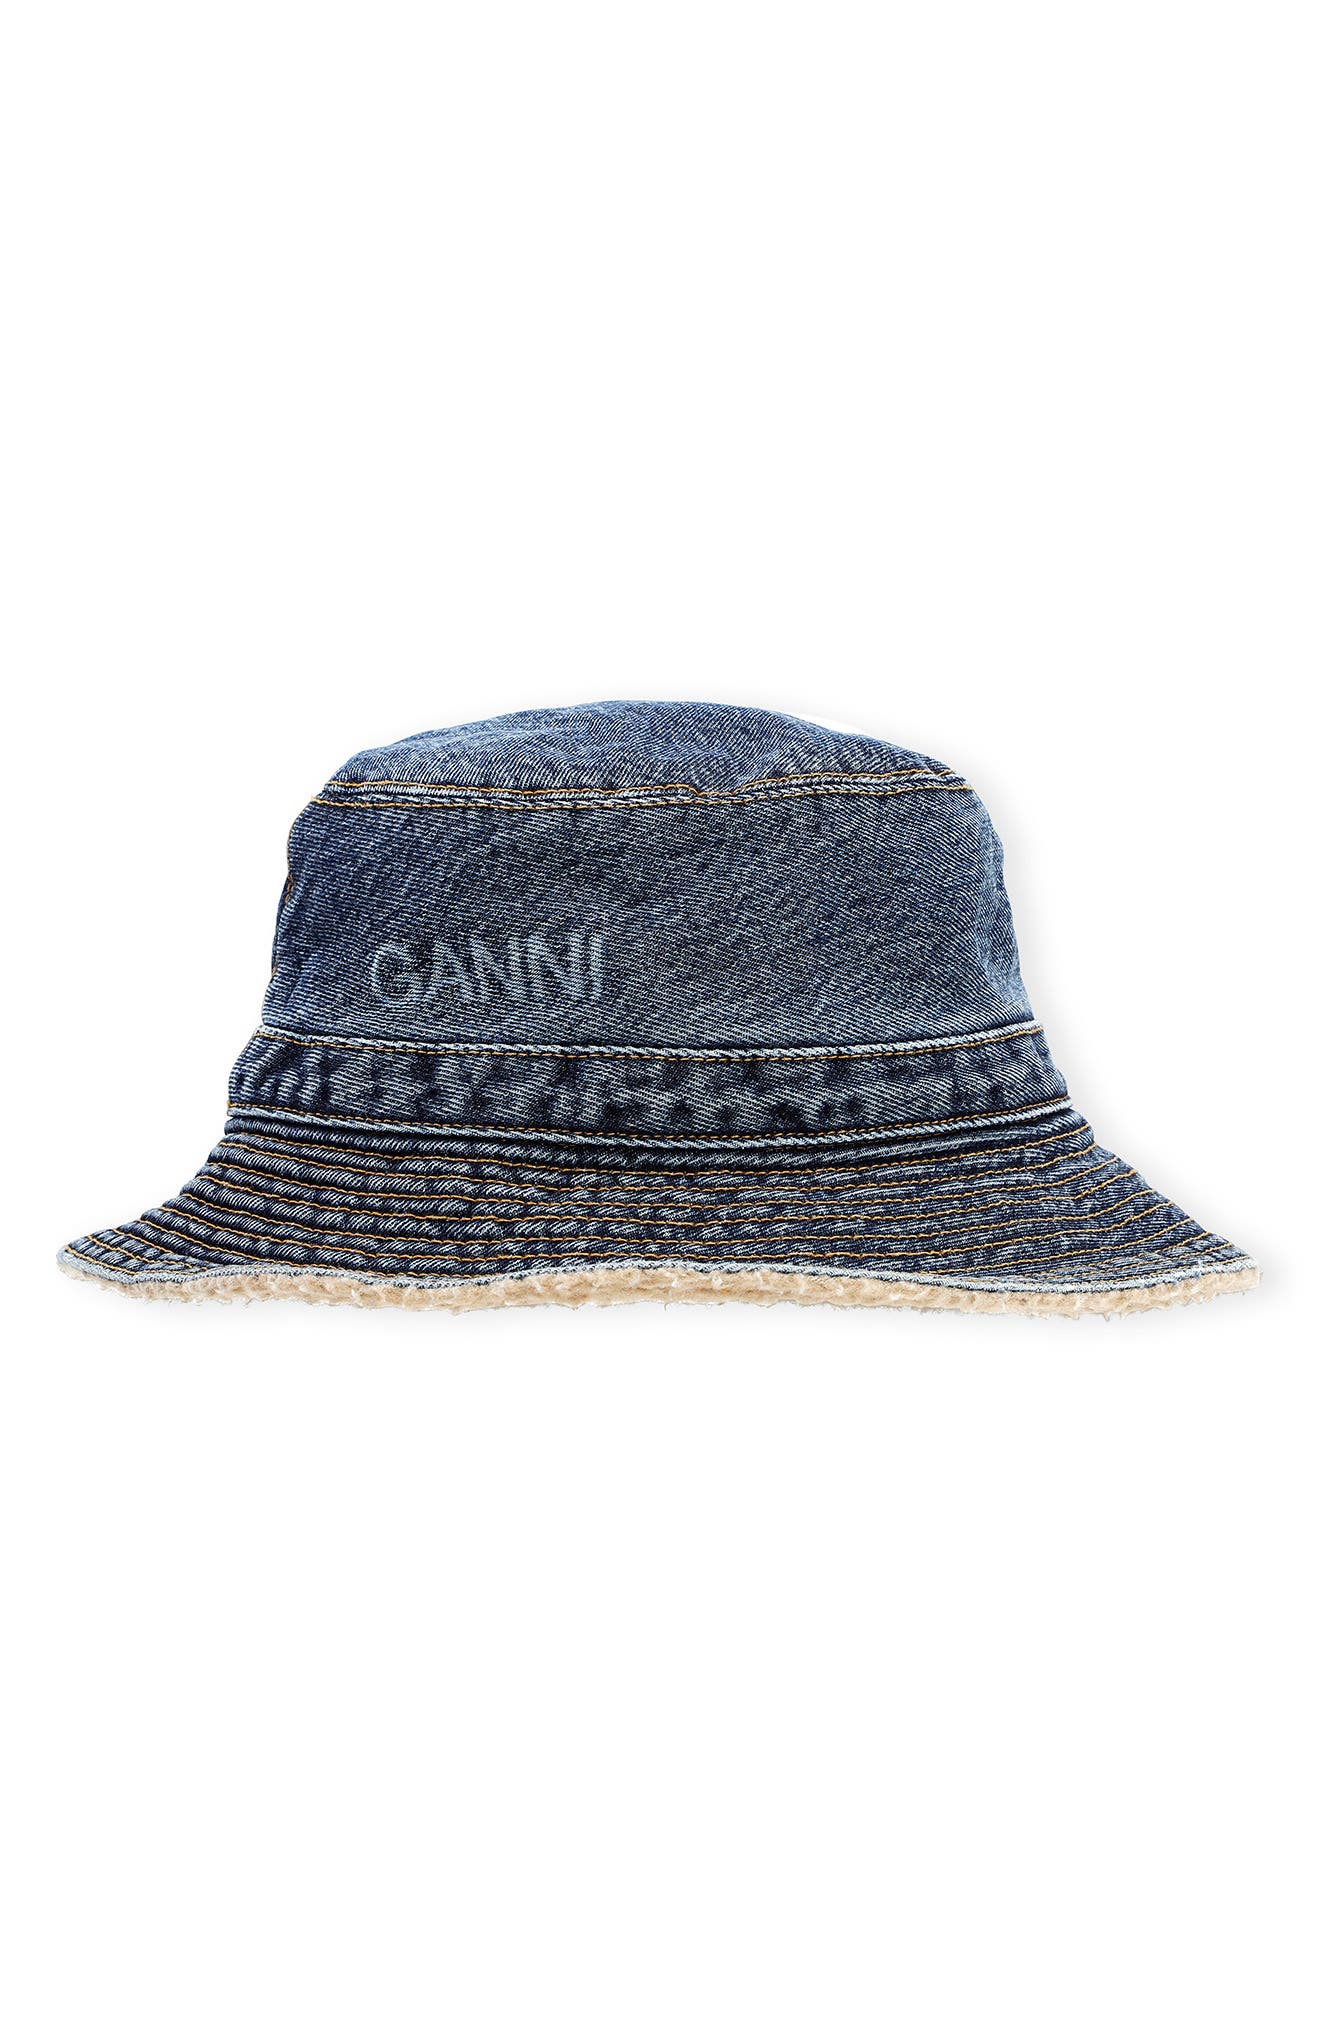 Ganni Bucket Hats Top Sellers, 51% OFF | espirituviajero.com